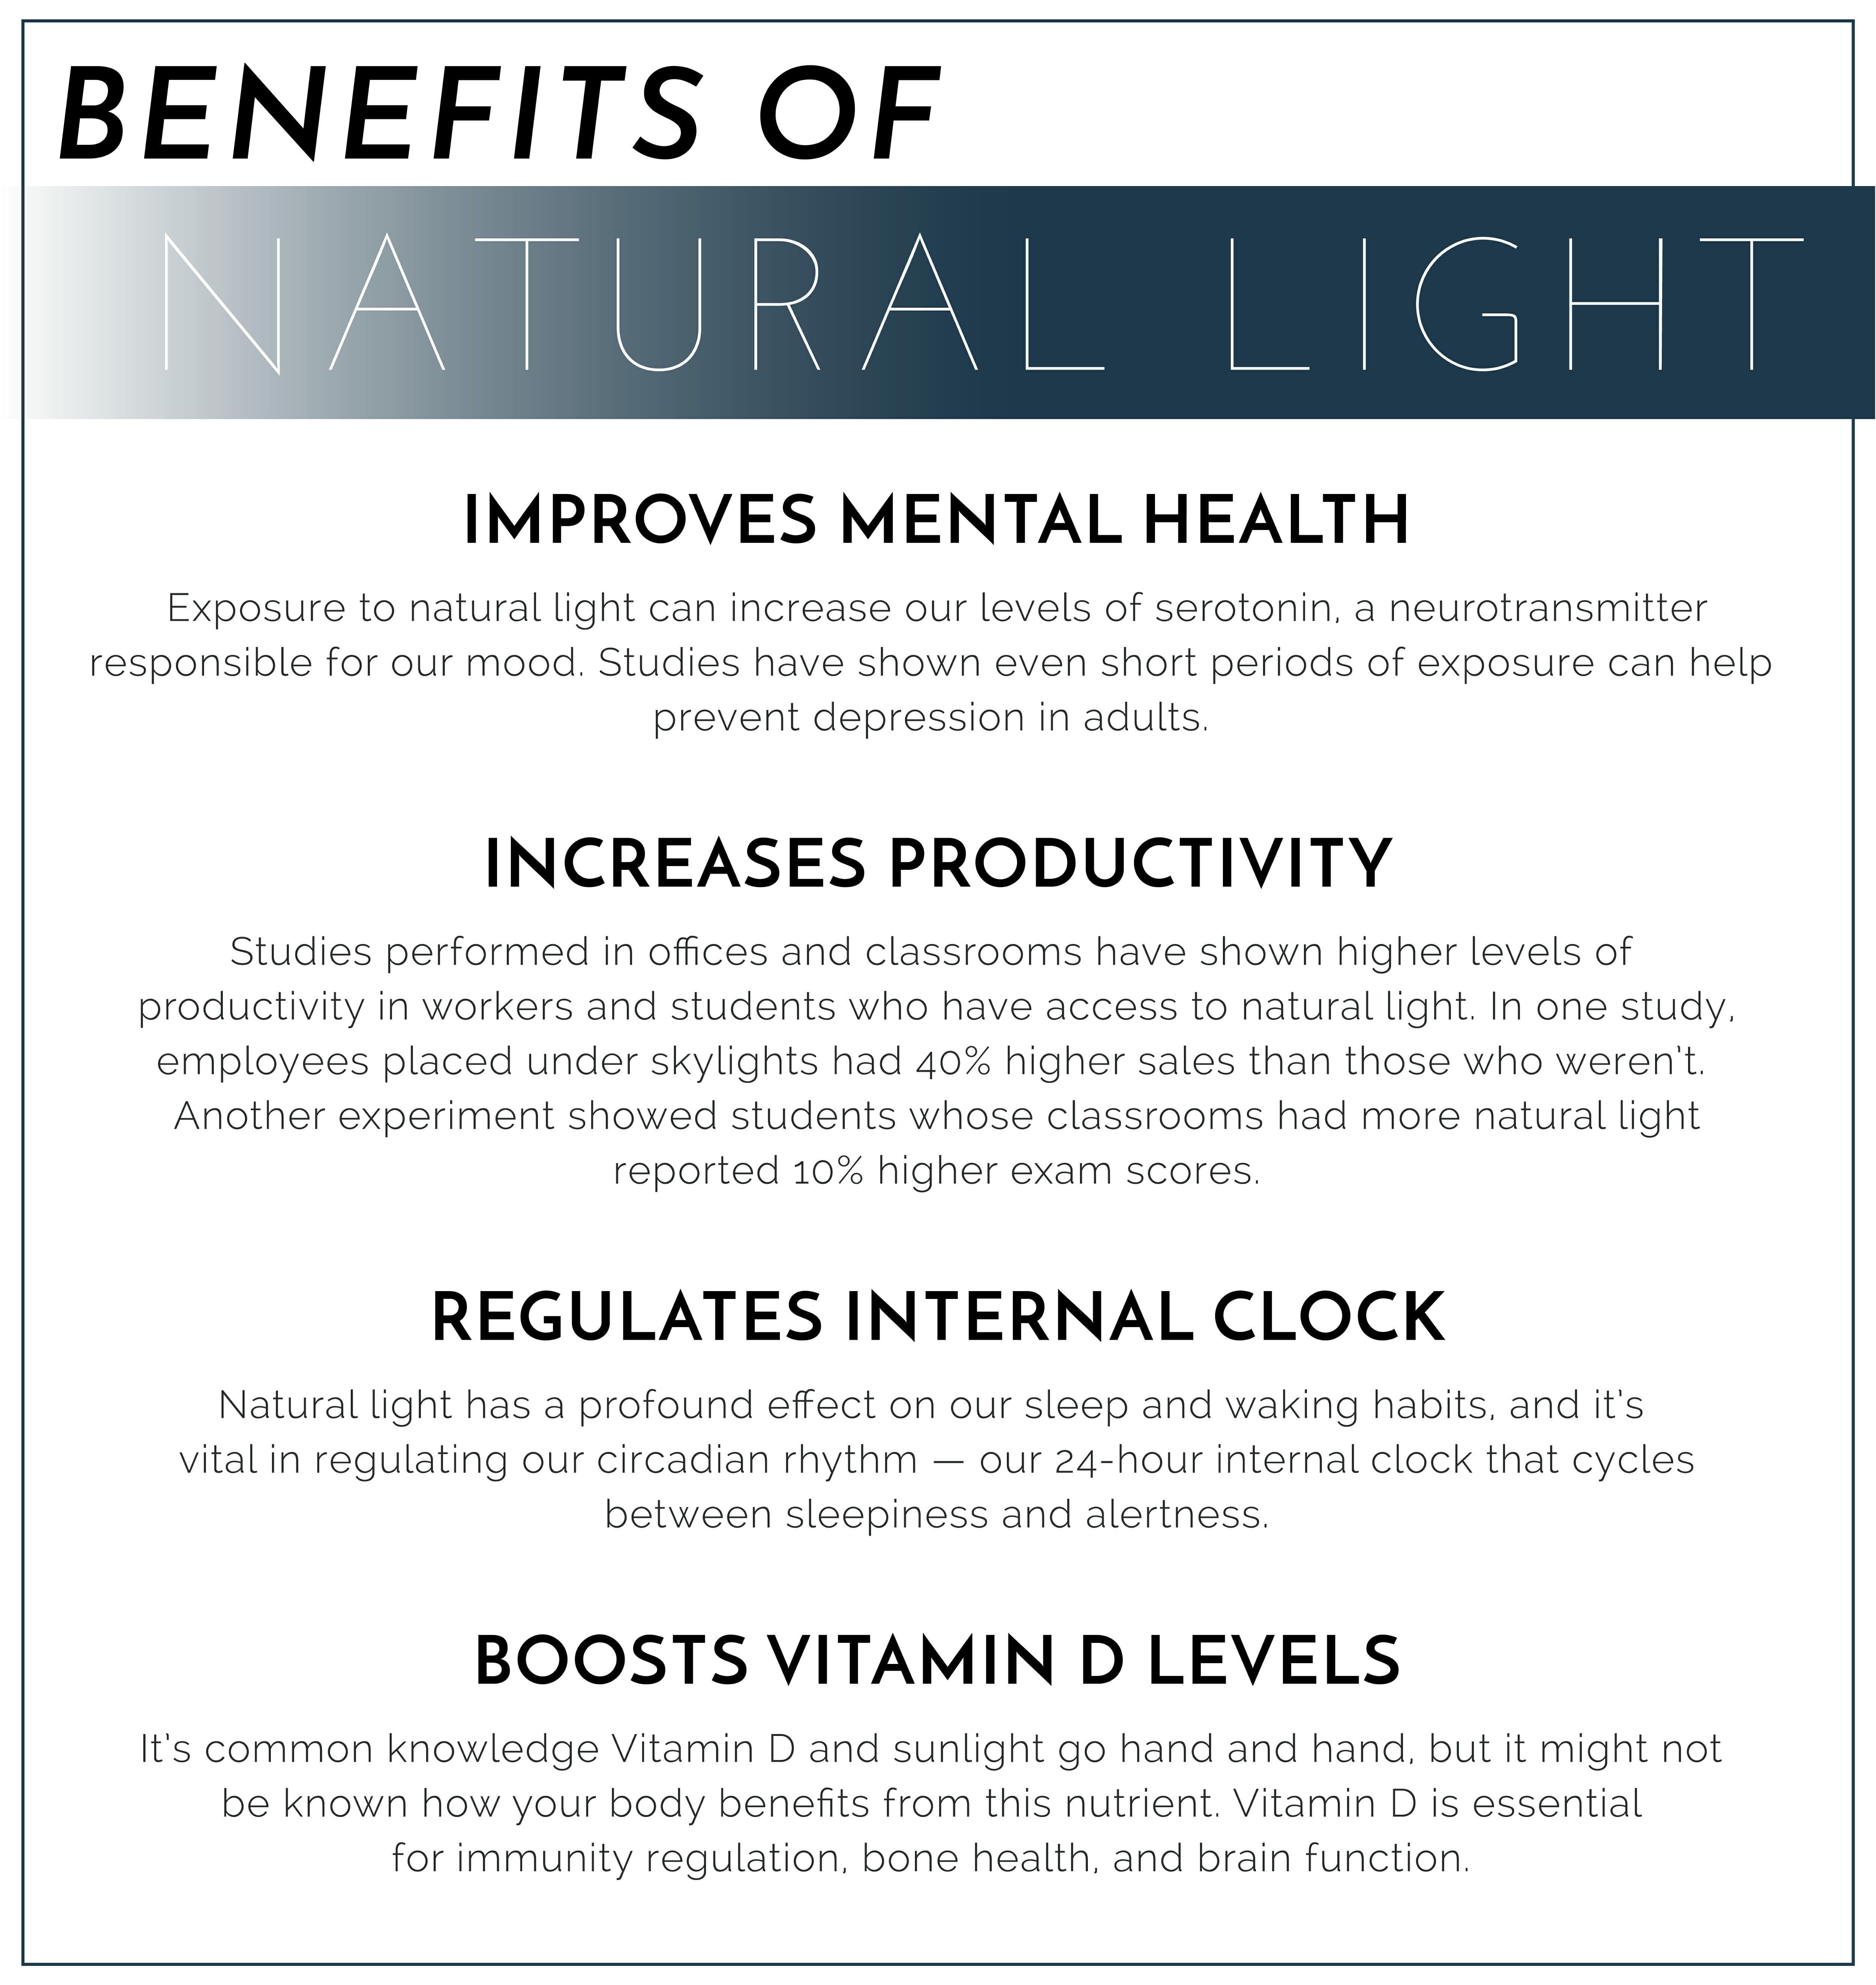 Benefits of natural light